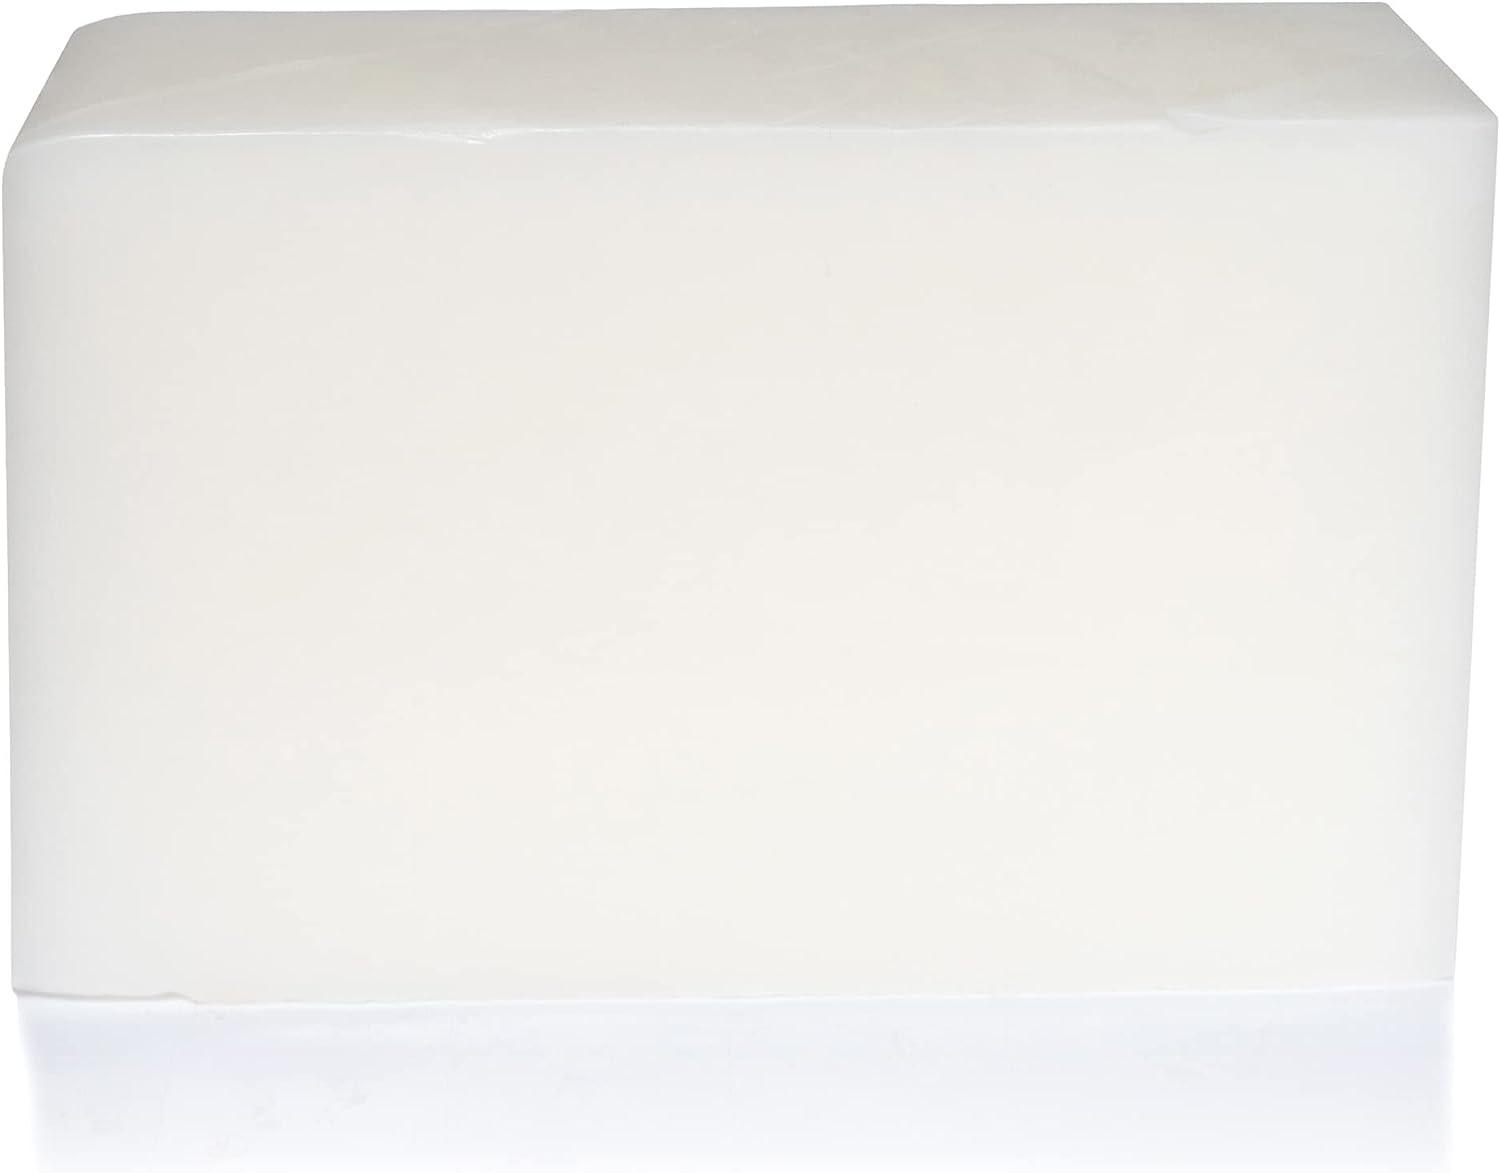 Velona 10 lb - Ultra Clear Glycerin Soap Base SLS/SLES Free | Melt and Pour | Transparent Natural Bar for The Best Result for Soap Making